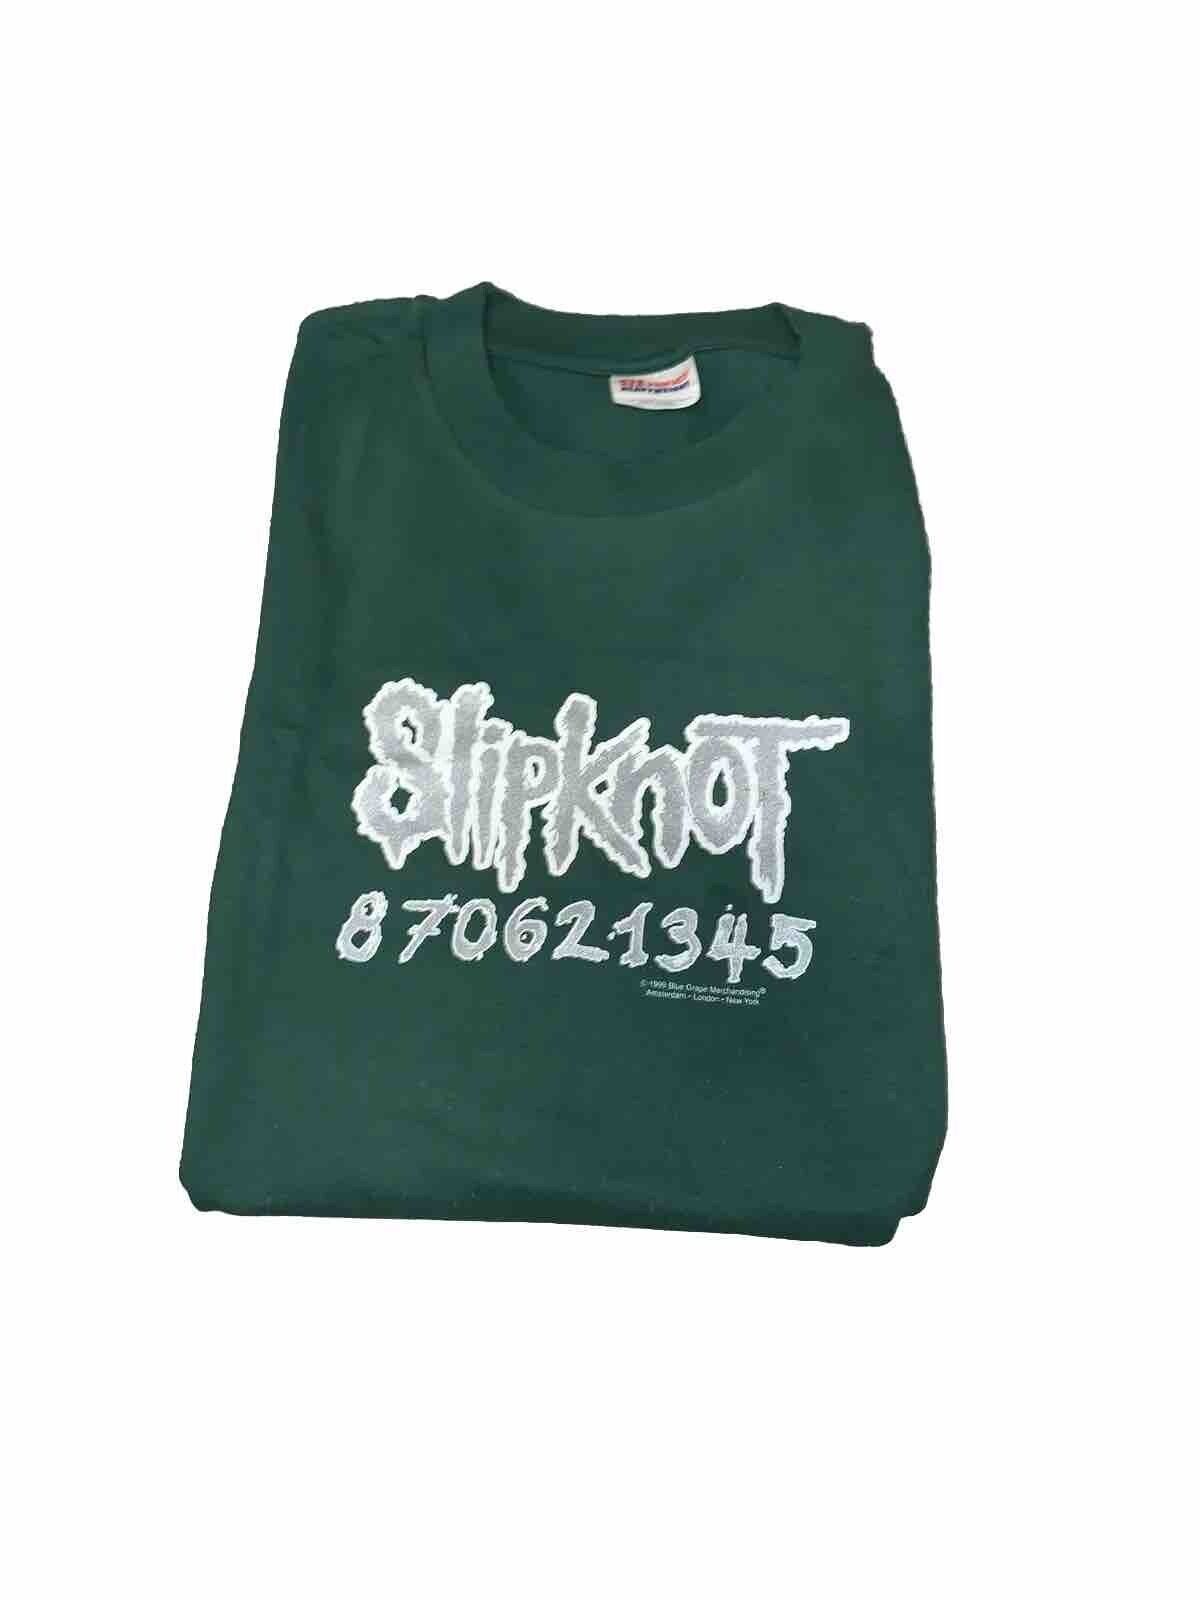 NEW Deadstock 1999 Vintage Slipknot 870621345 T-Shirt Size Large Green